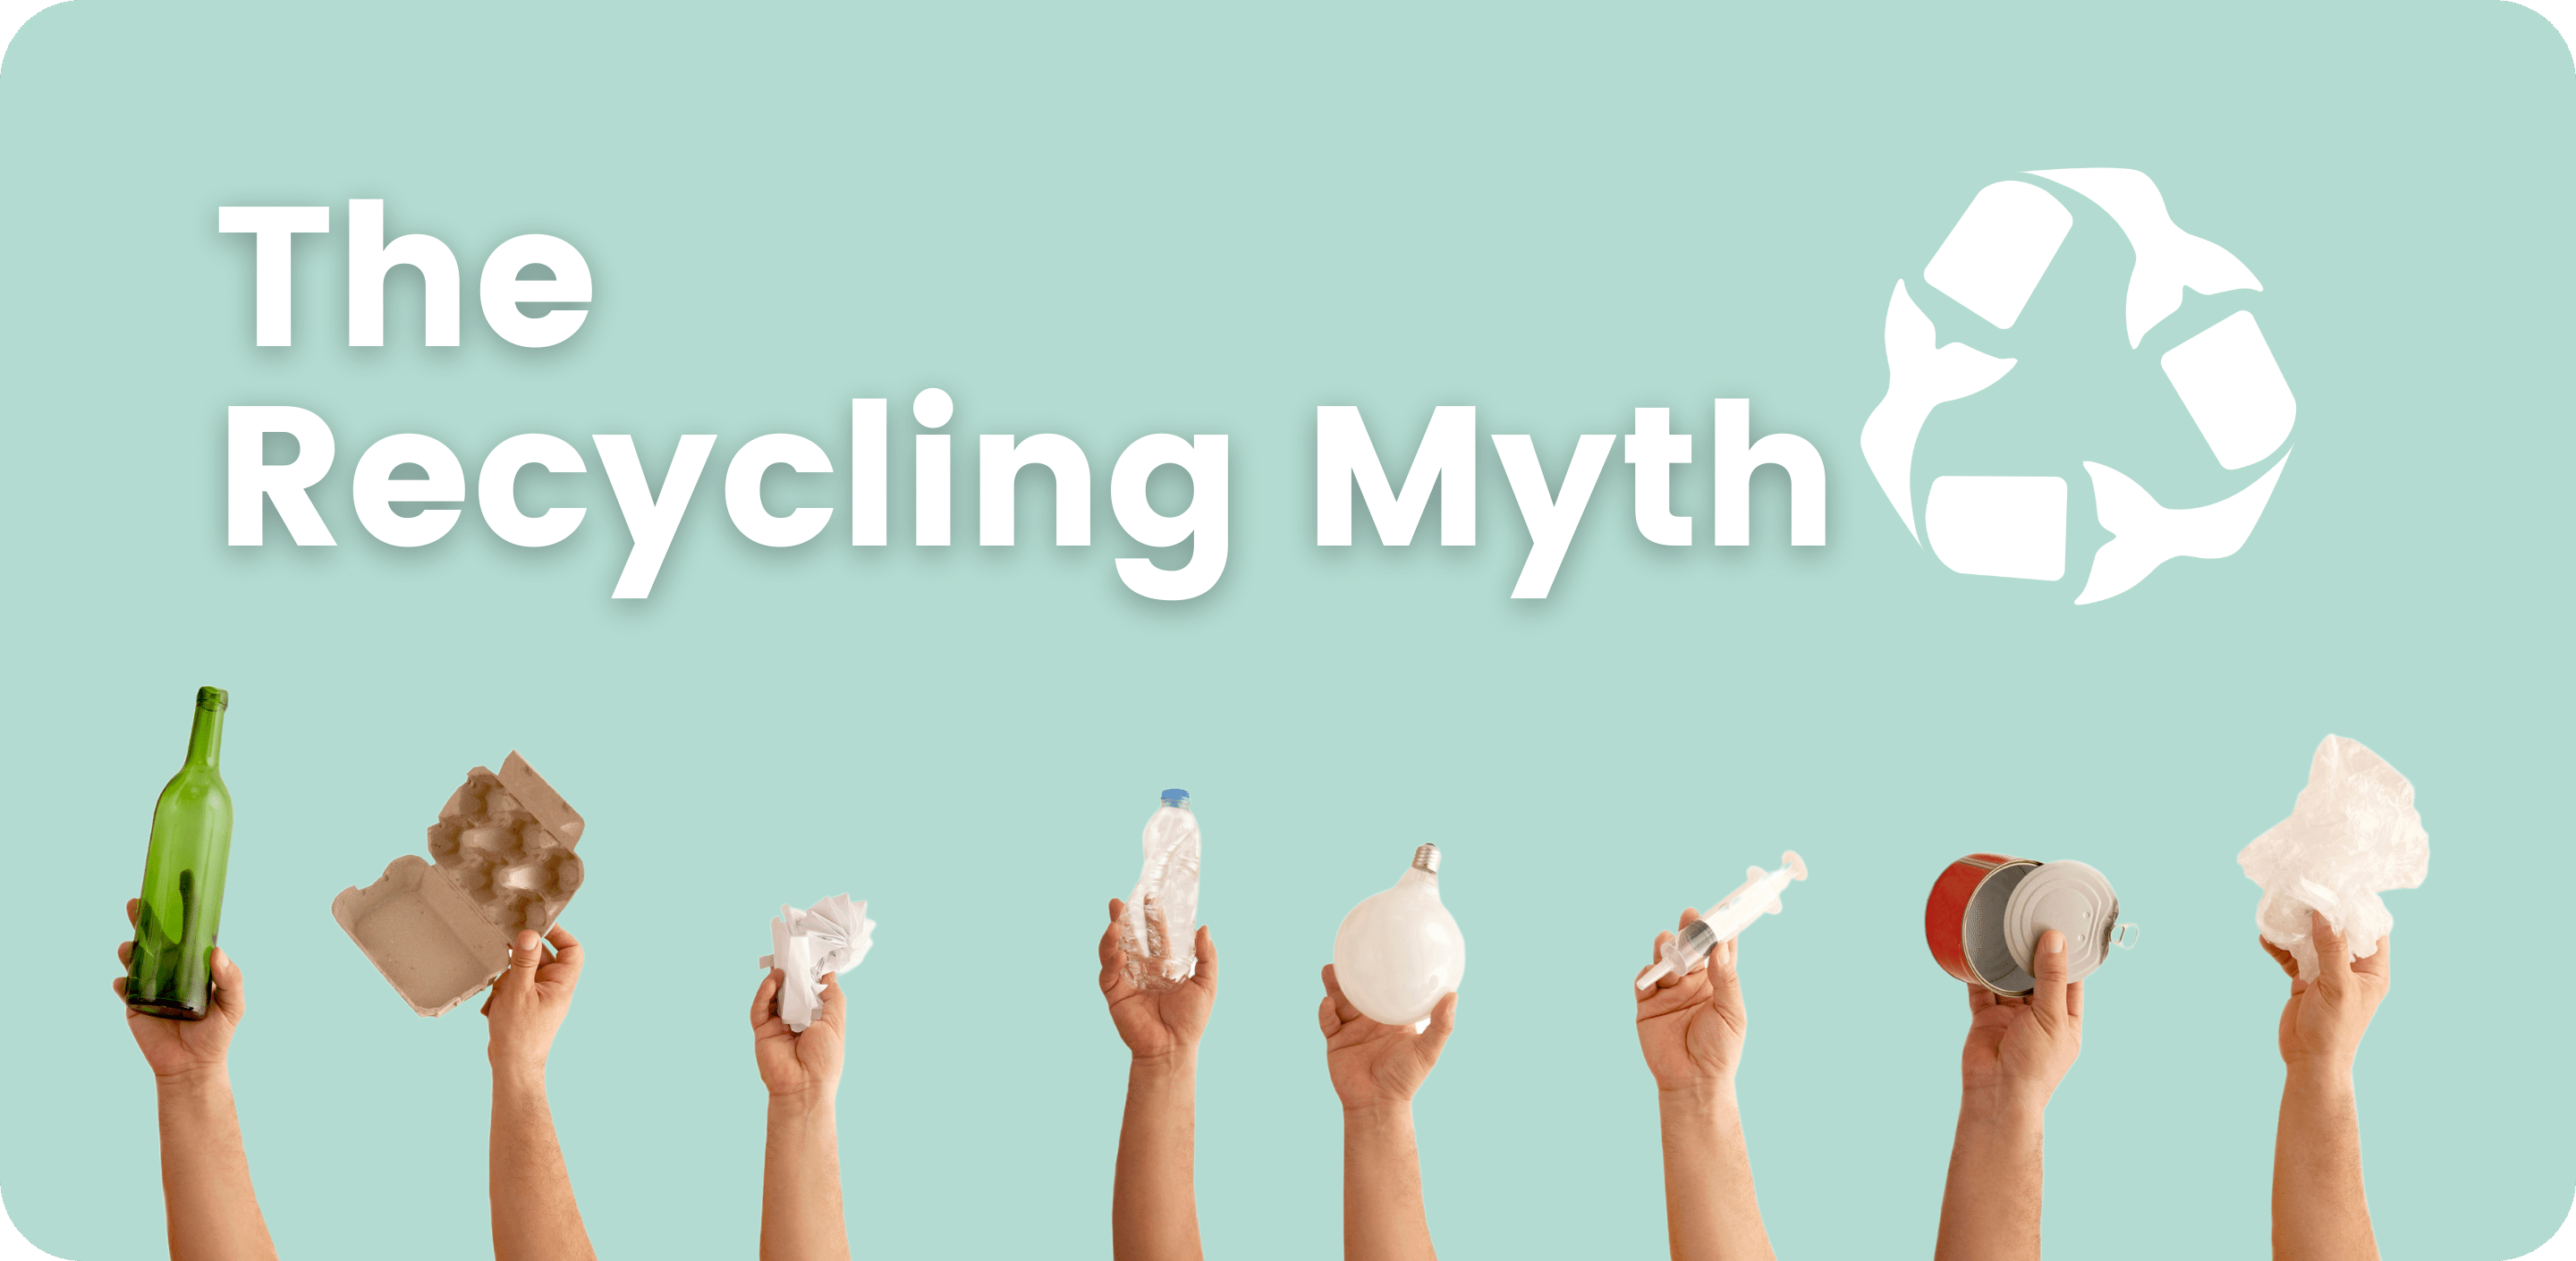 Green myth busting: reusables vs single-use